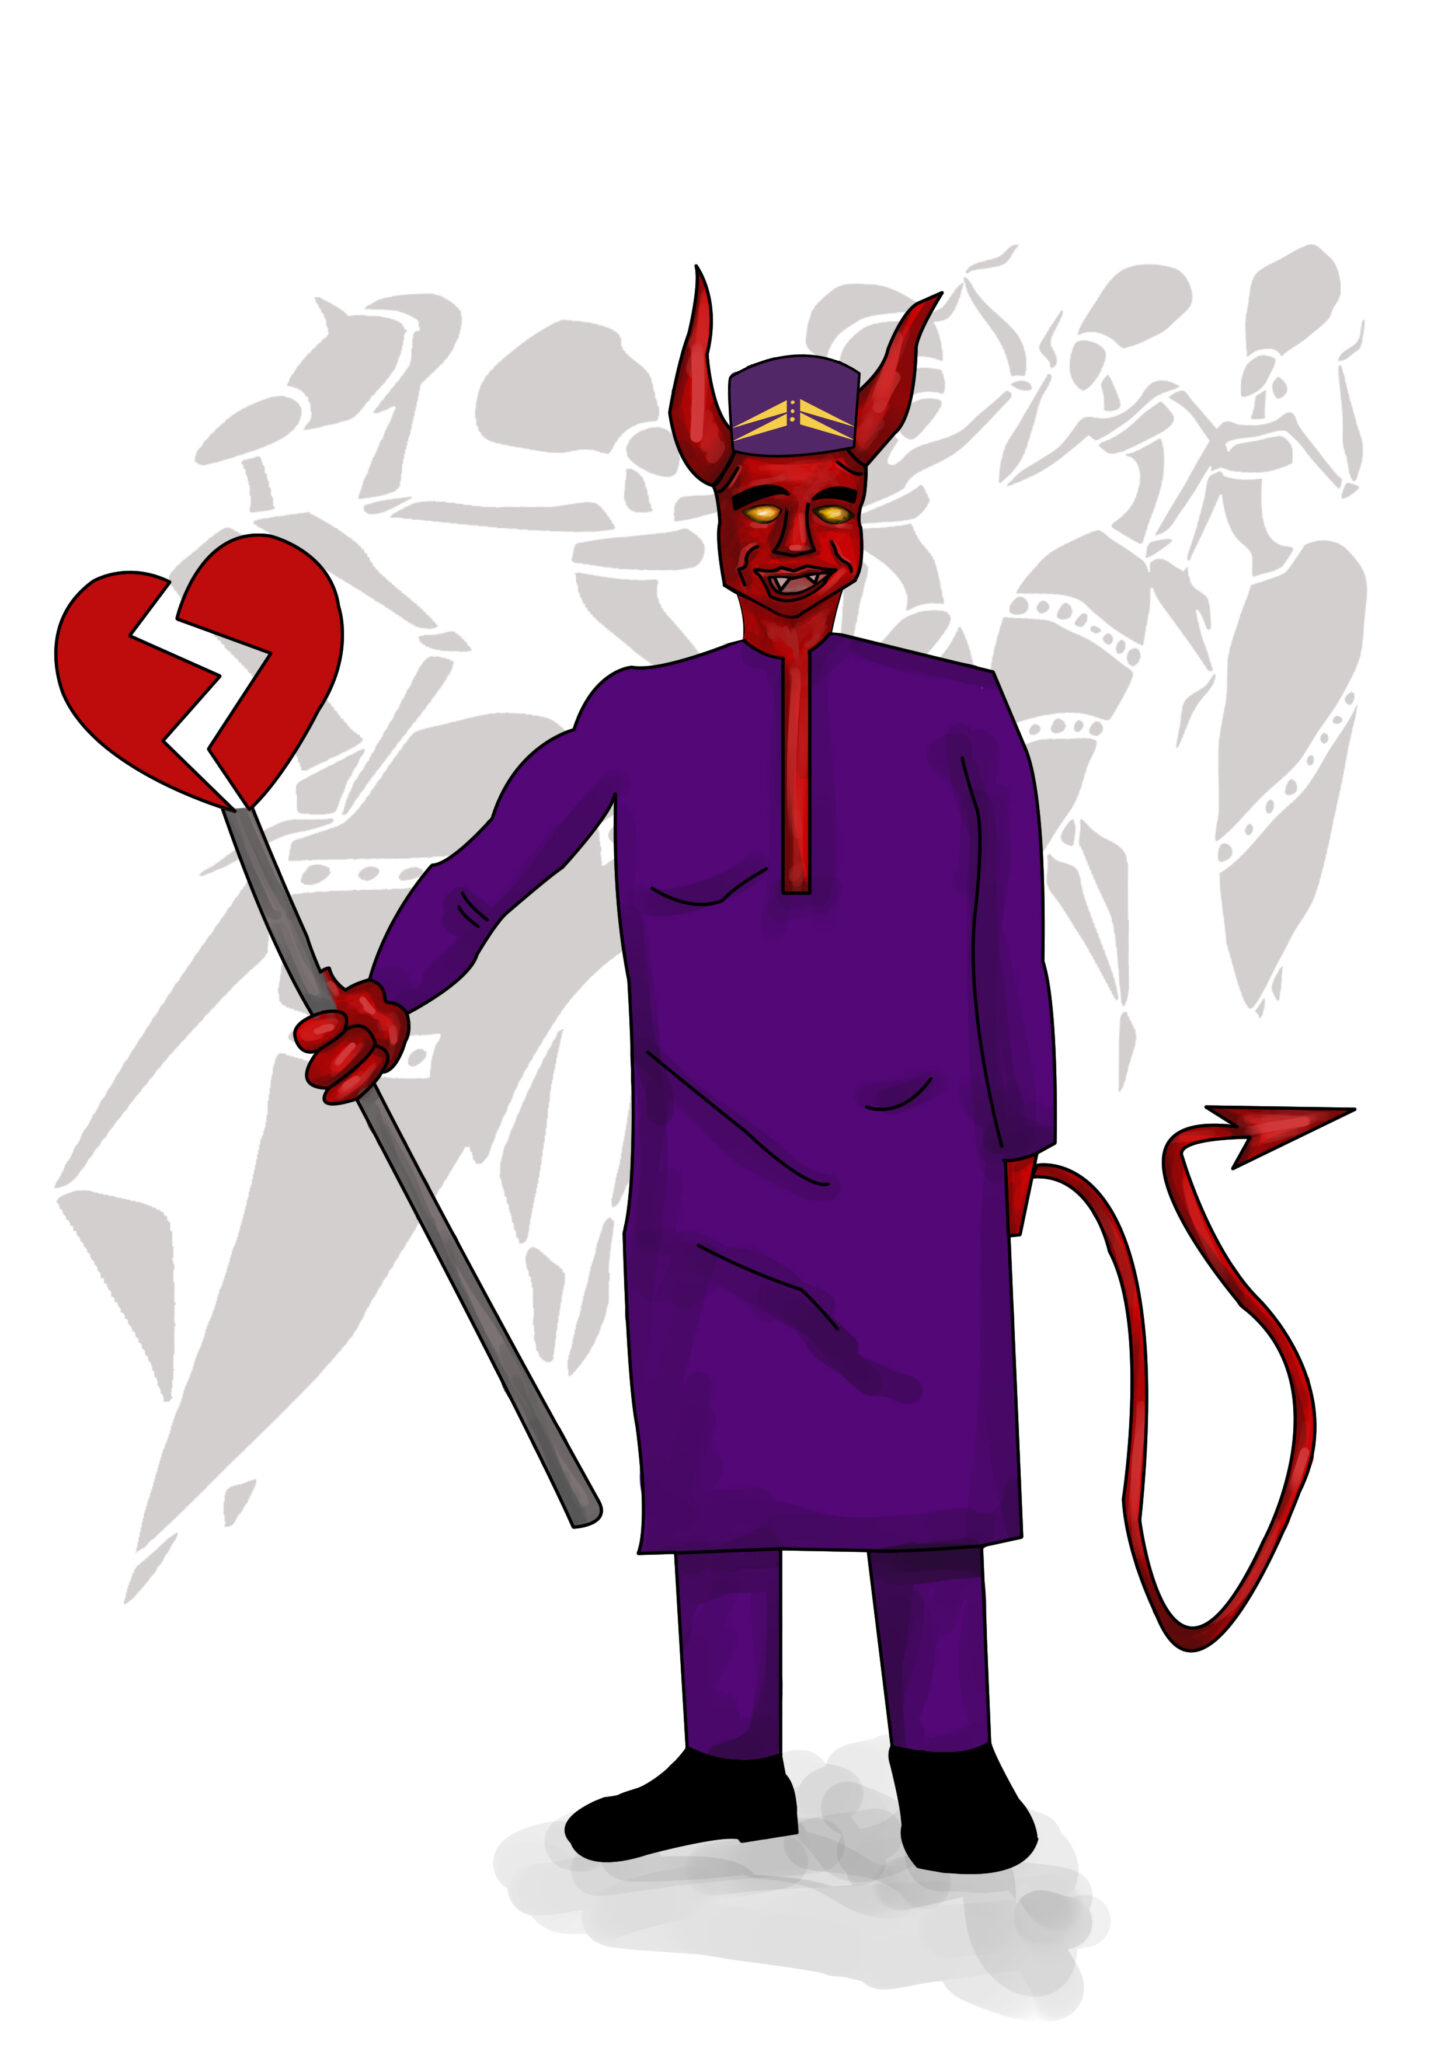 The buba and sokoto is the uniform of the Yoruba demon 